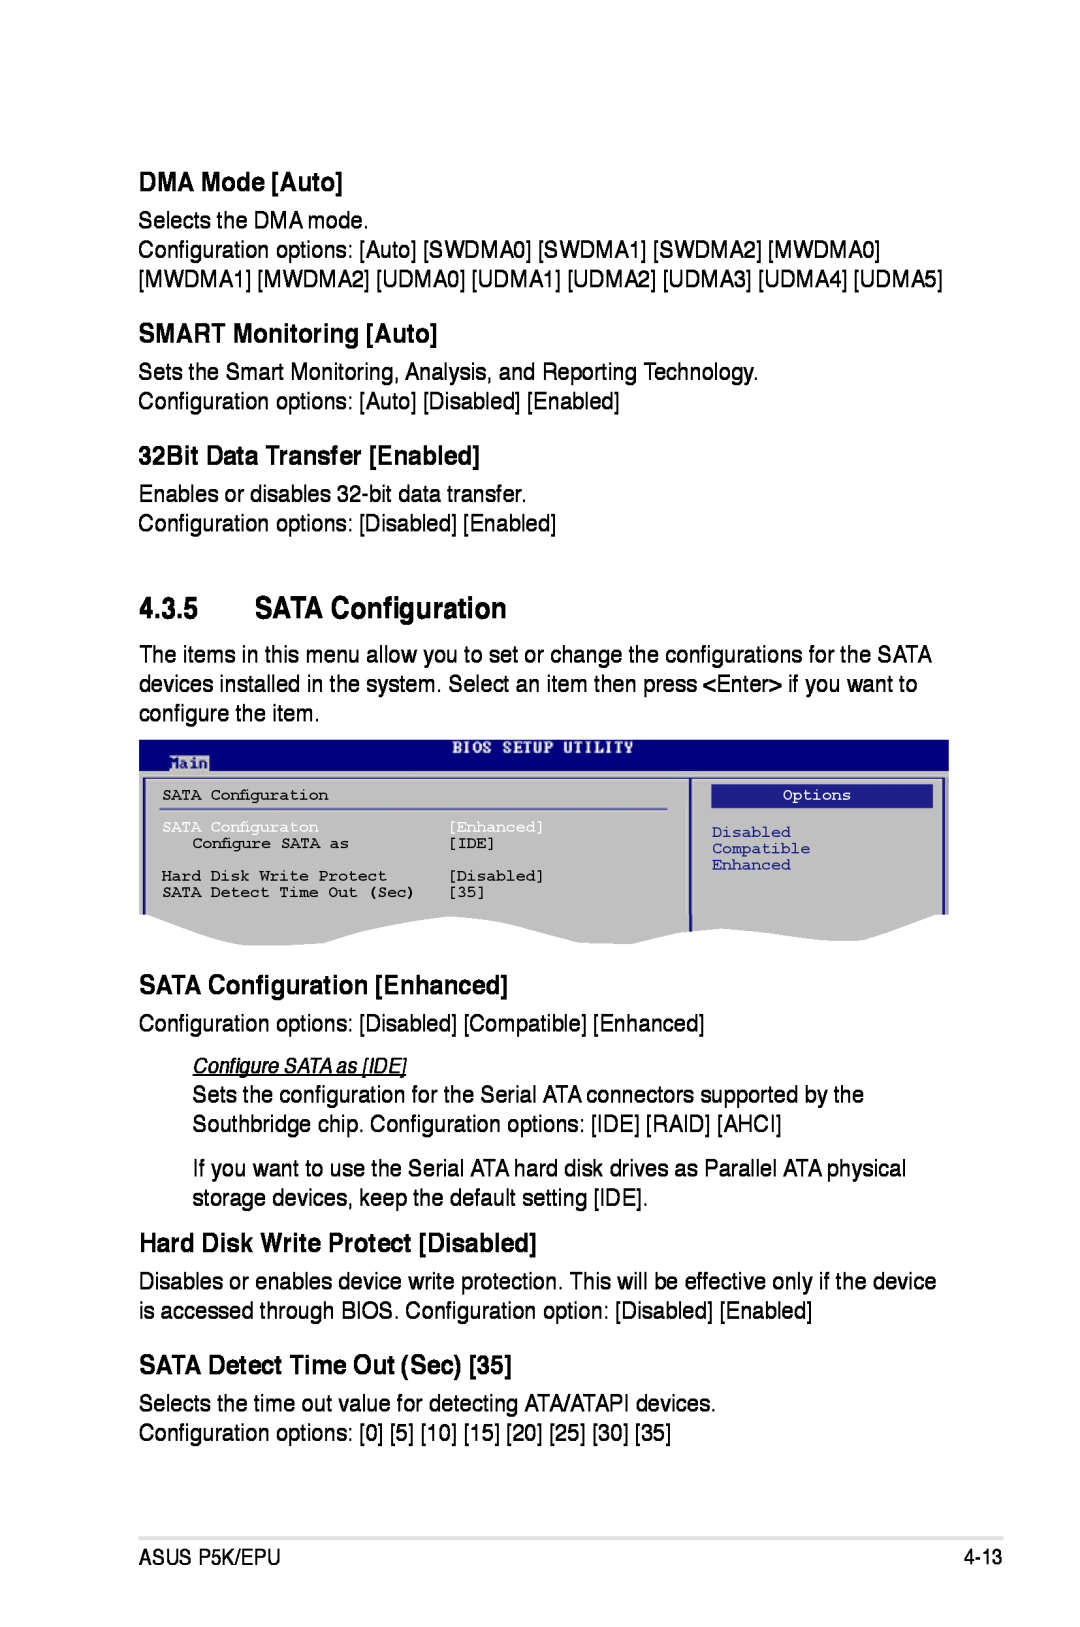 Asus P5K/EPU manual SATA Configuration, DMA Mode Auto, SMART Monitoring Auto, 32Bit Data Transfer Enabled 